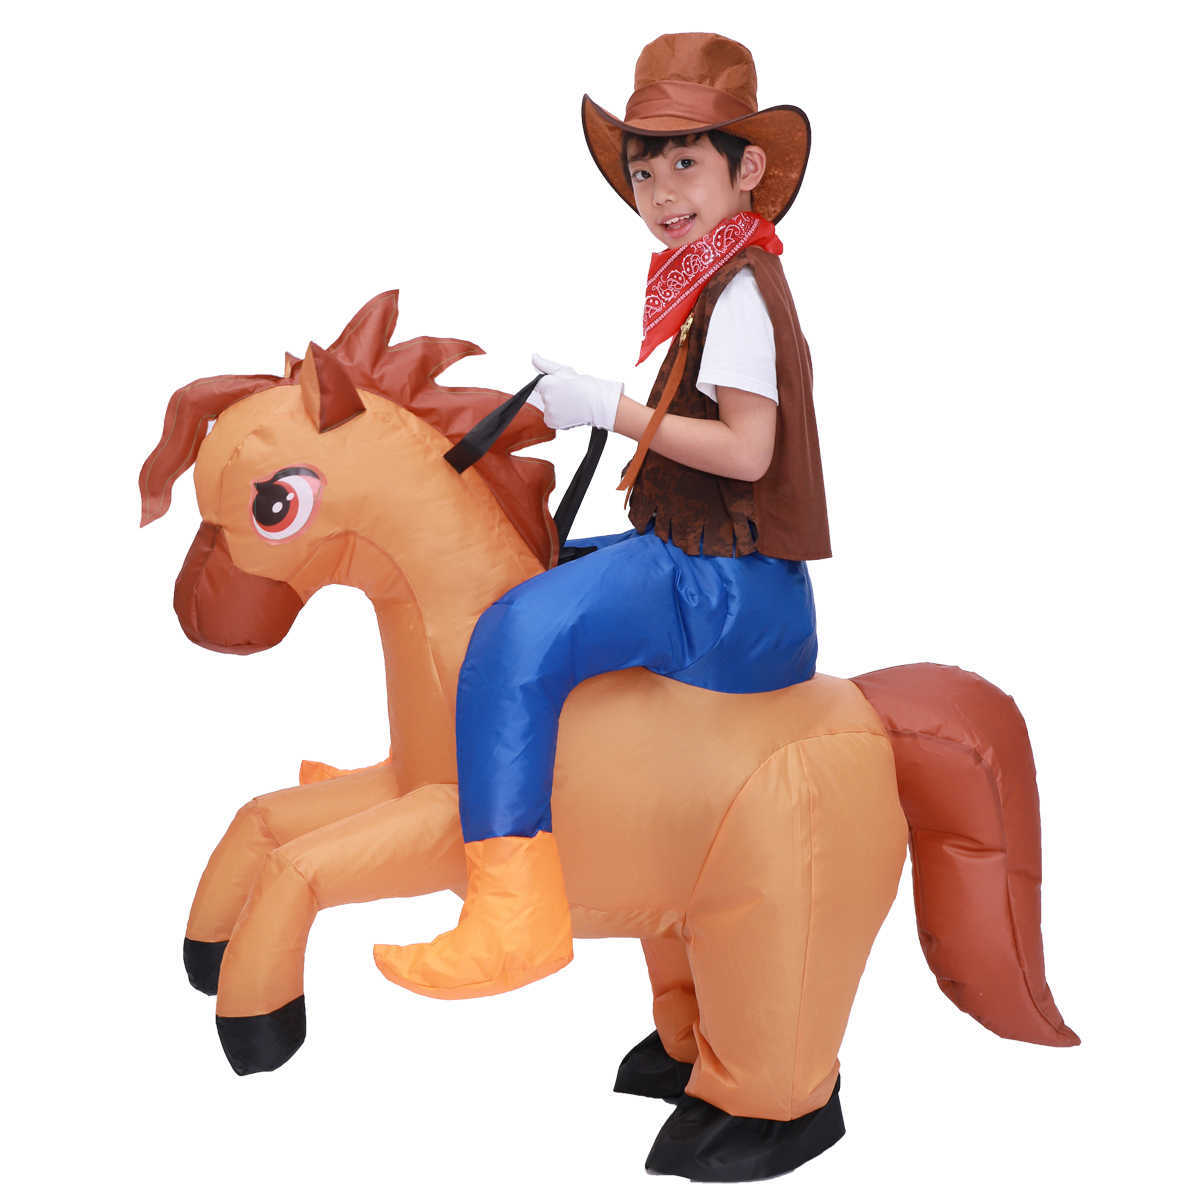 Bambini bambino gonfiabile costume cavallo costume cosplay ragazze boys cowboy ride cavallo divertente halloween purim partito gonfiore indumento indumento disfraces Q0910